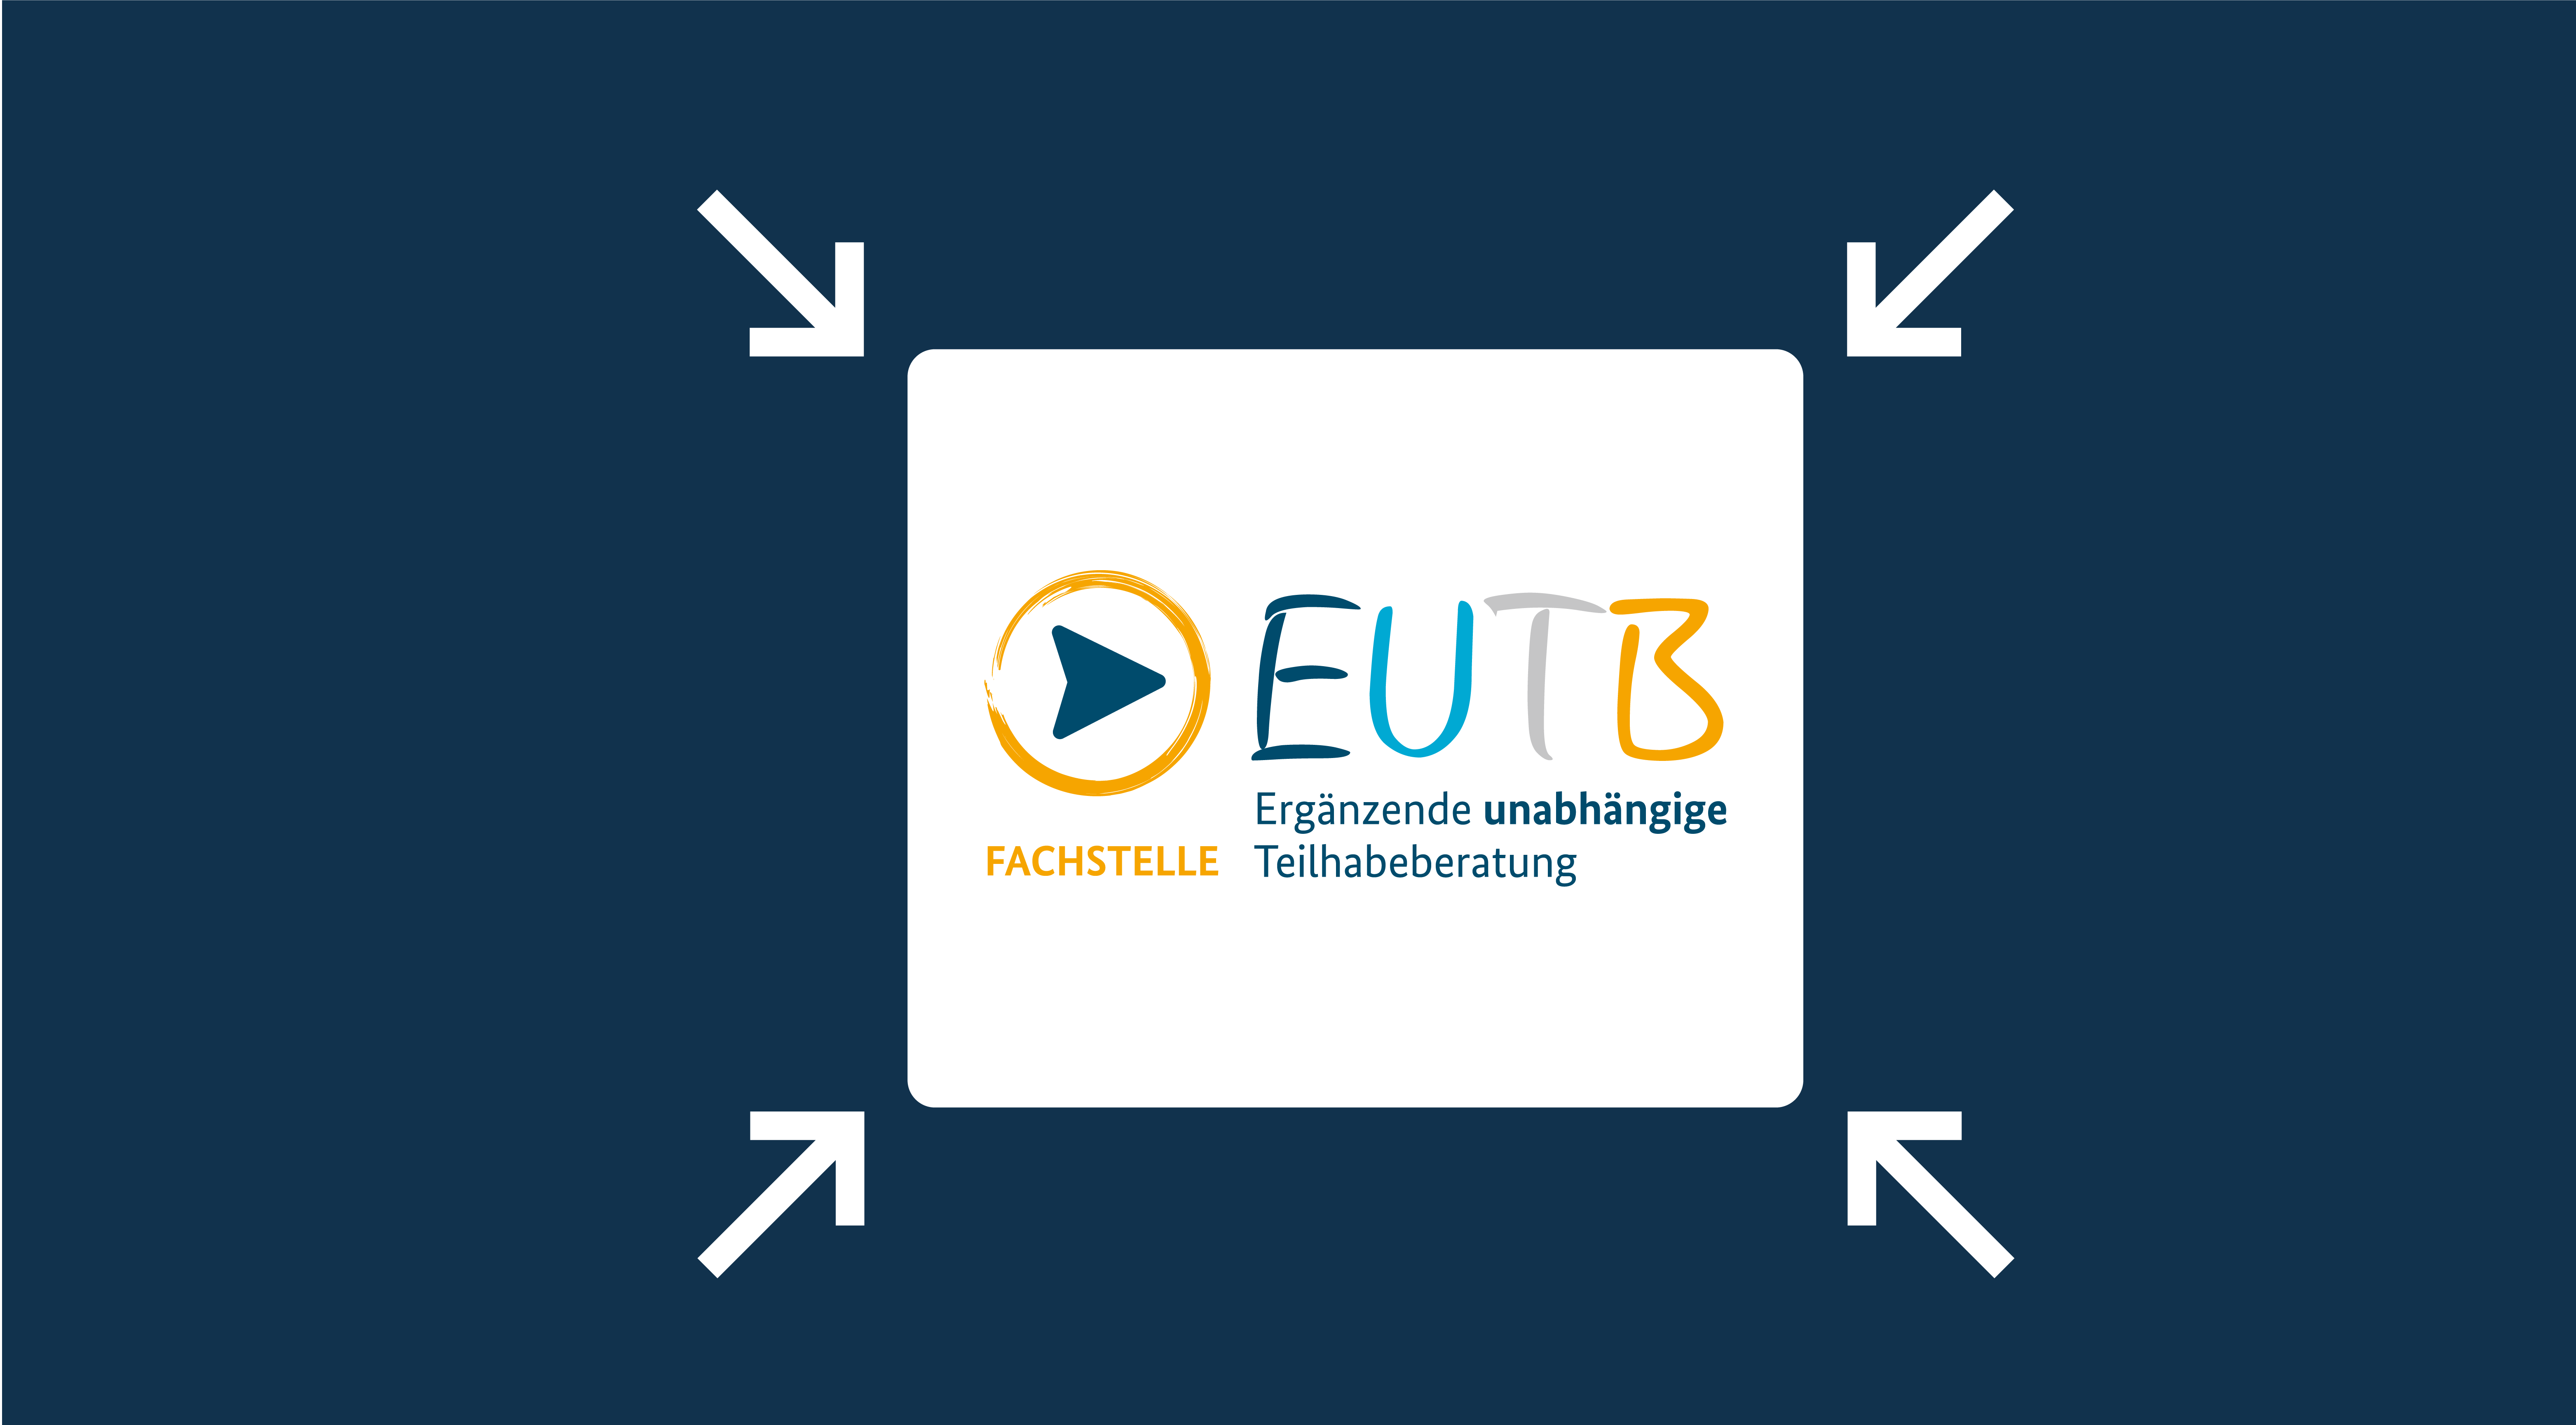 EUTB Logo im Zentrum